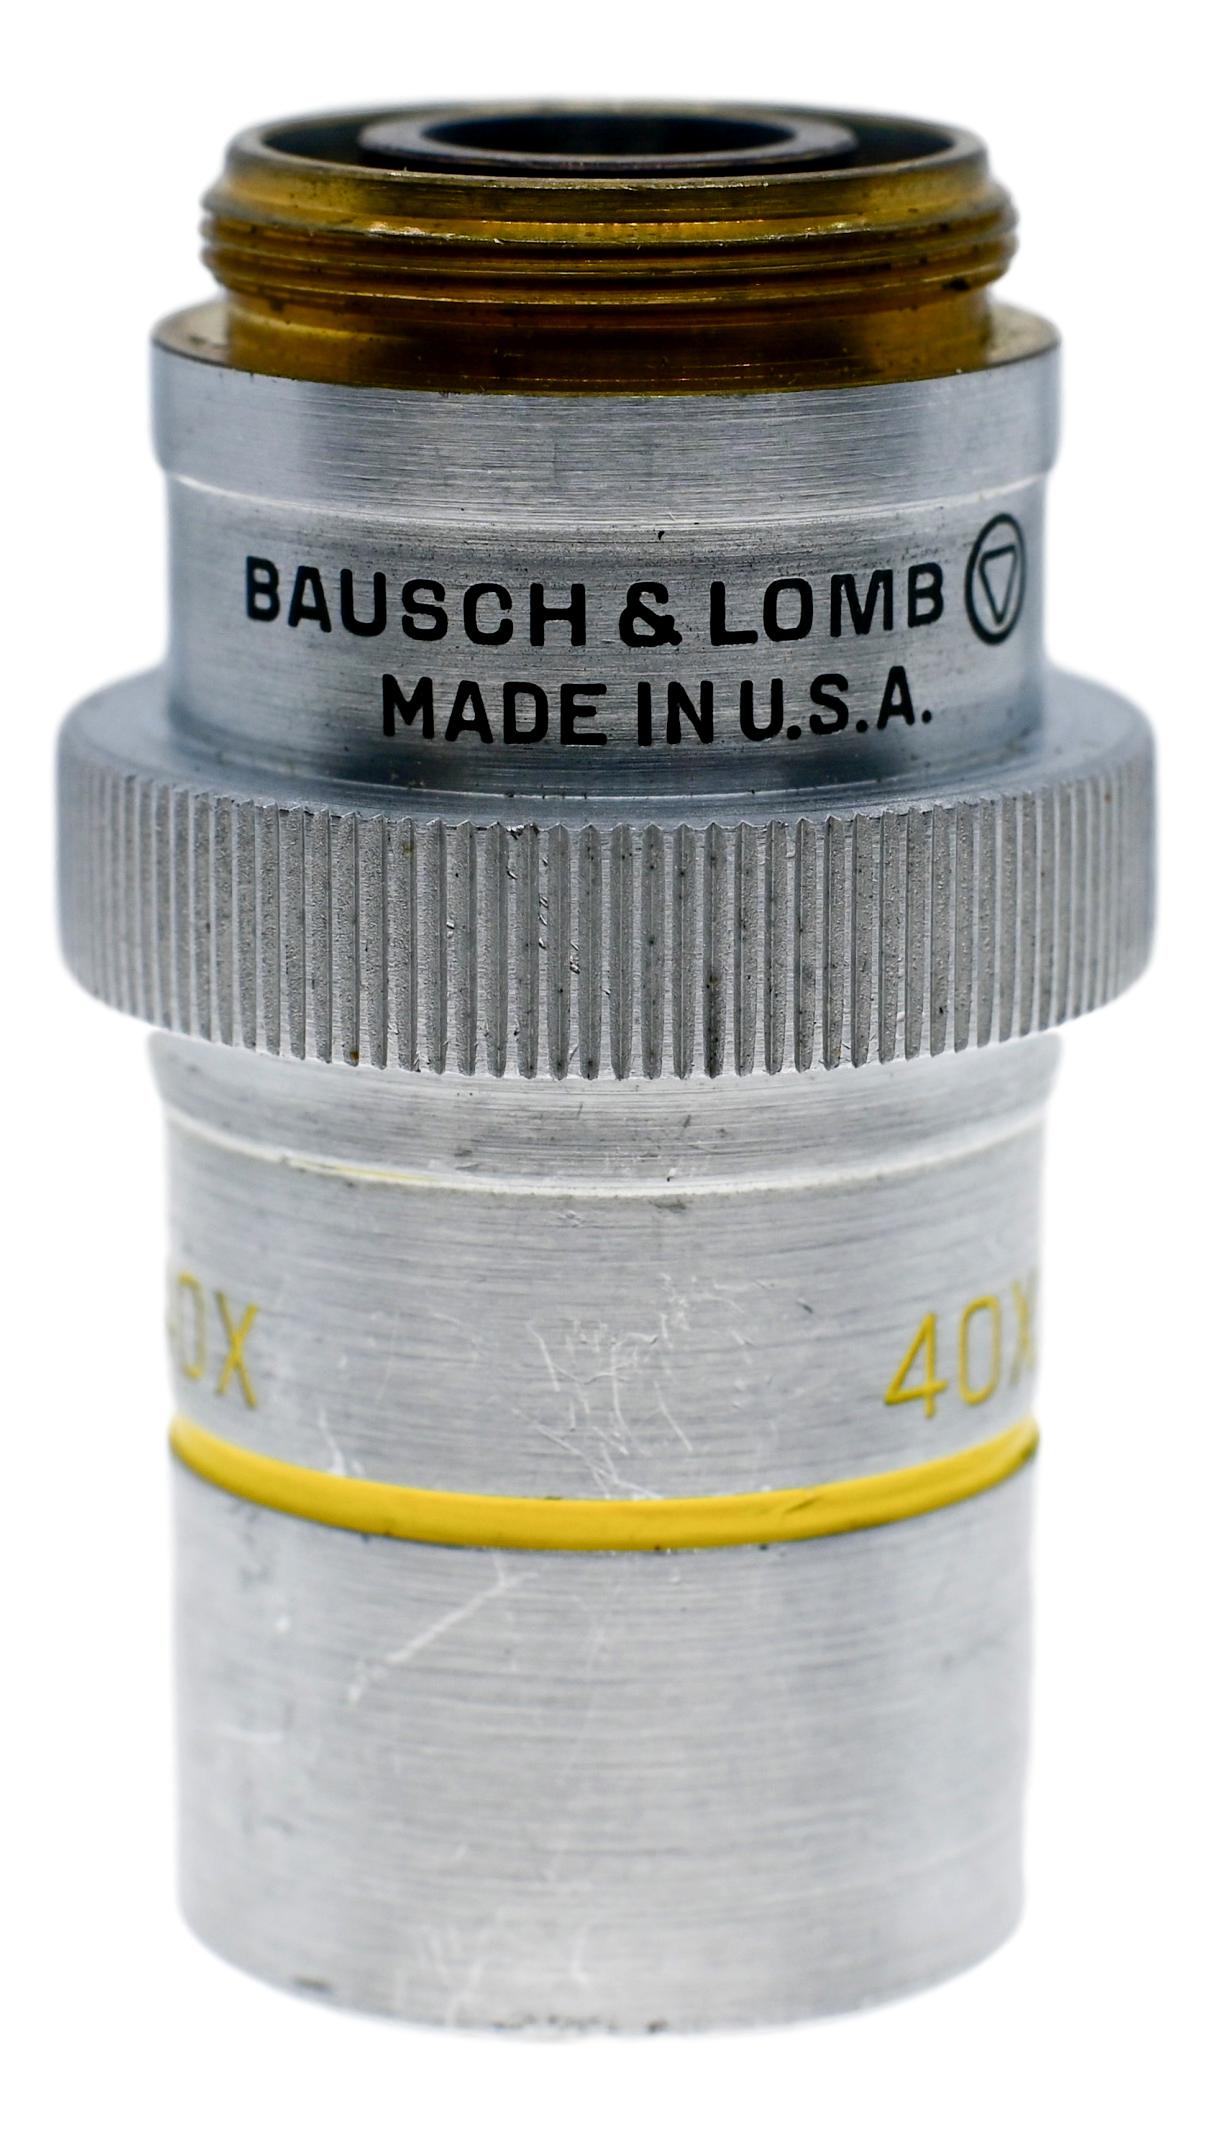 Bausch & Lomb 40x BF / DF Metallugerical PlanAchromat Objective